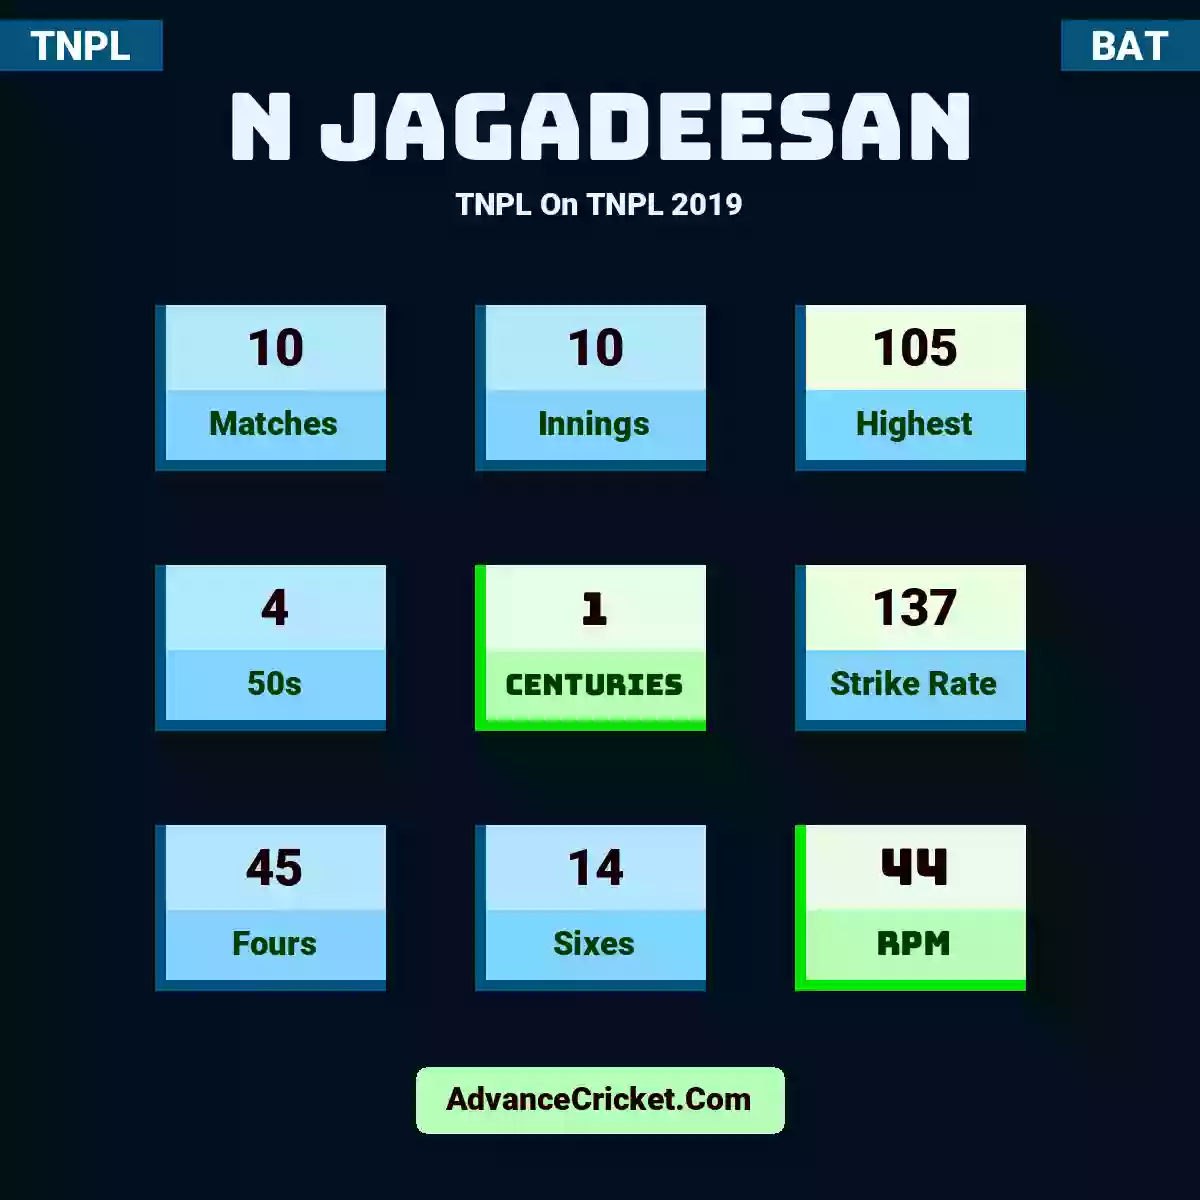 N Jagadeesan TNPL  On TNPL 2019, N Jagadeesan played 10 matches, scored 105 runs as highest, 4 half-centuries, and 1 centuries, with a strike rate of 137. N.Jagadeesan hit 45 fours and 14 sixes, with an RPM of 44.